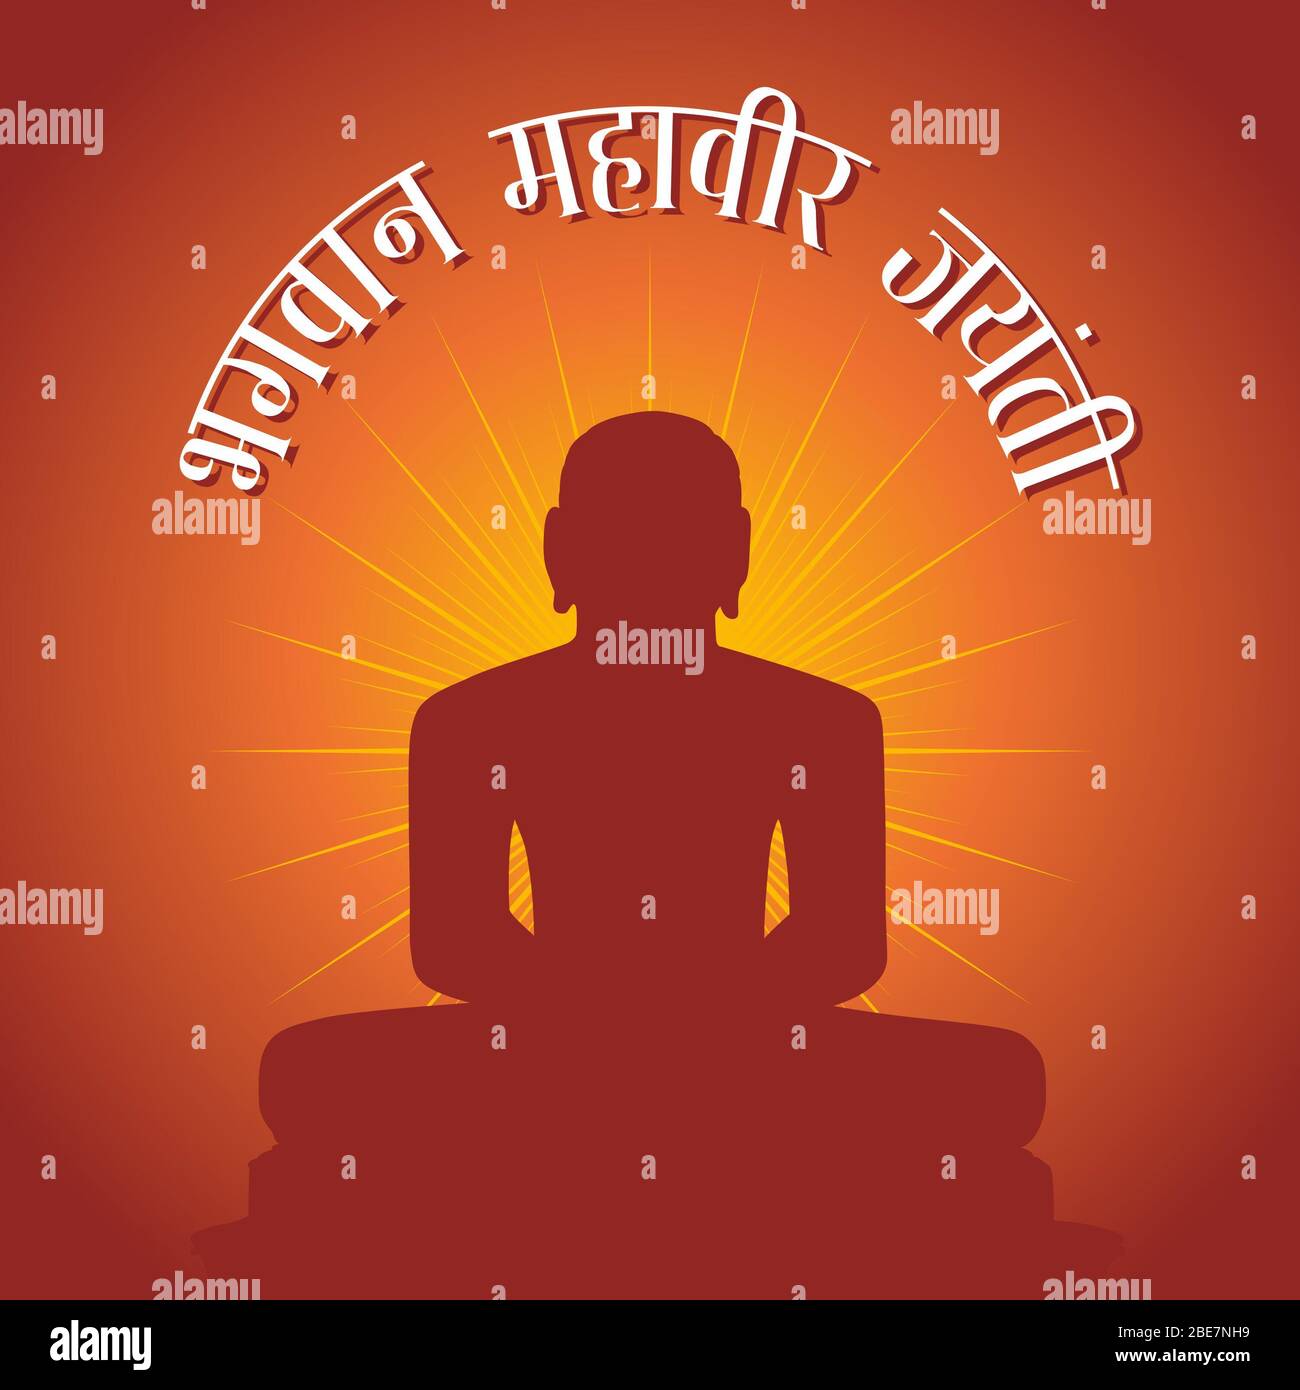 Hindi Typography 'Bhagwan Mahavir Jayanti' Means Happy Mahavir Jayanti - Indian Festival Banner Stock Photo